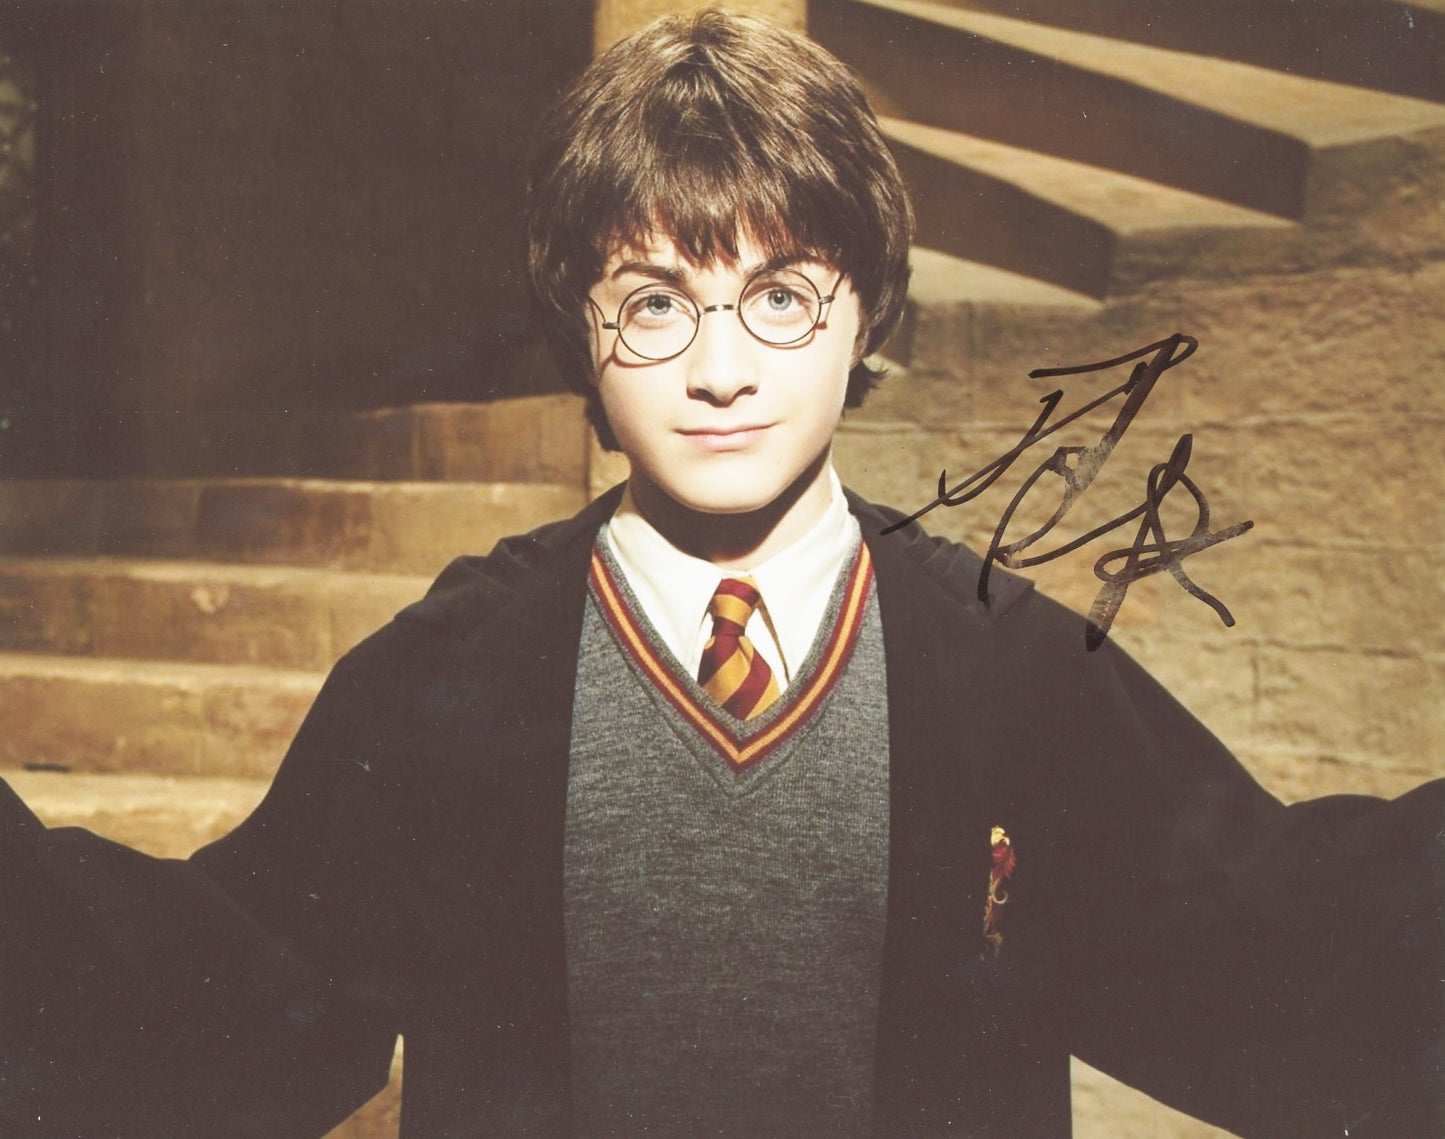 Daniel Radcliffe Signed 8x10 Photo